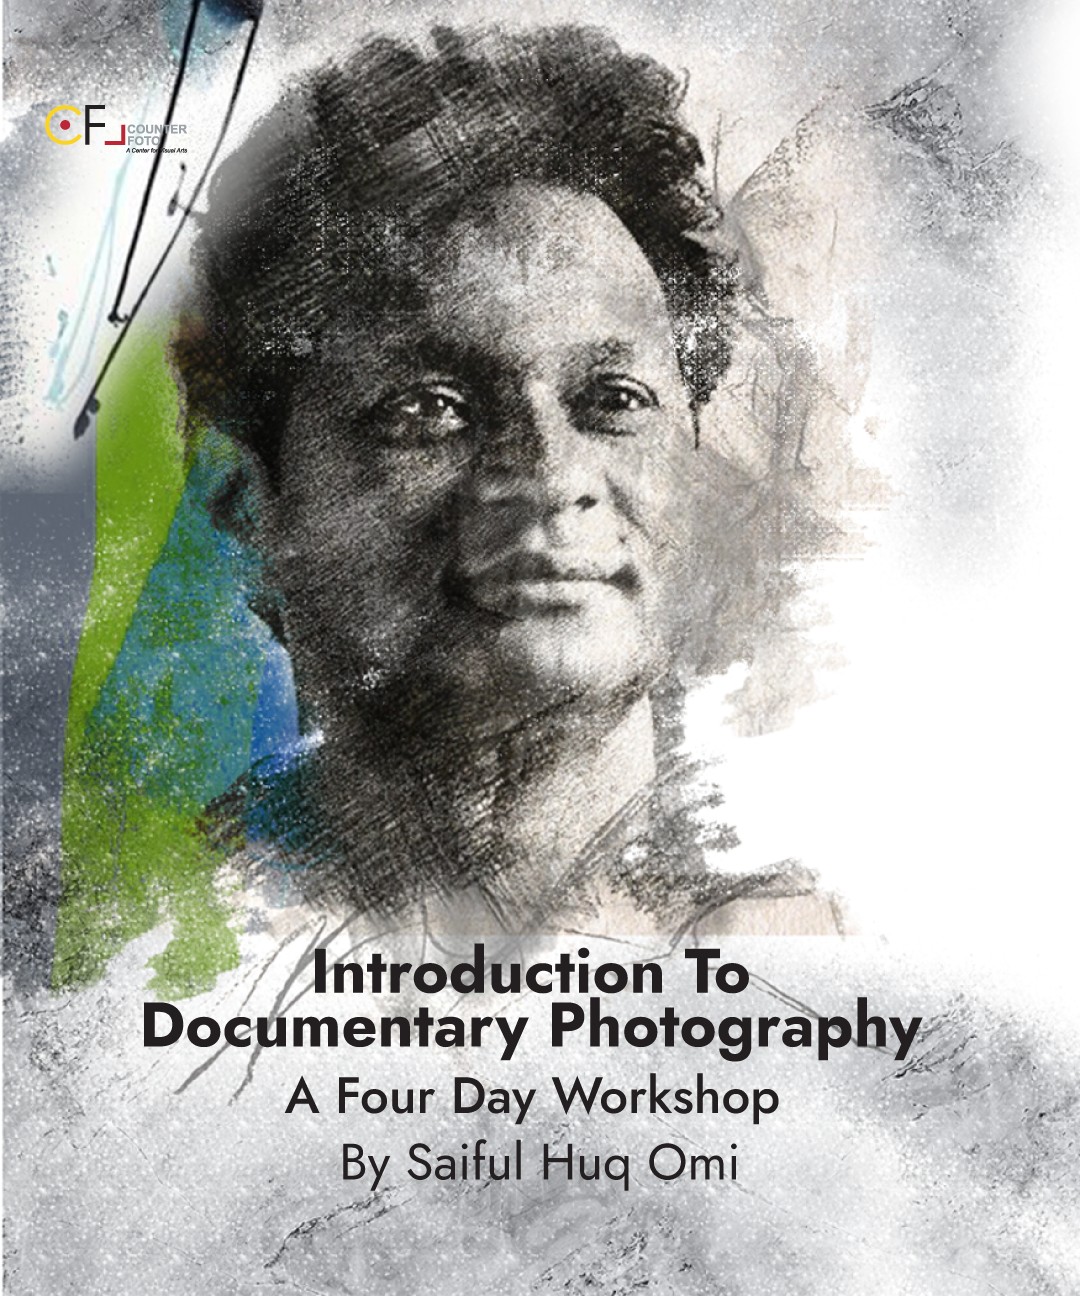 4-Day Workshop on Documentary Photography by Saiful Huq Omi